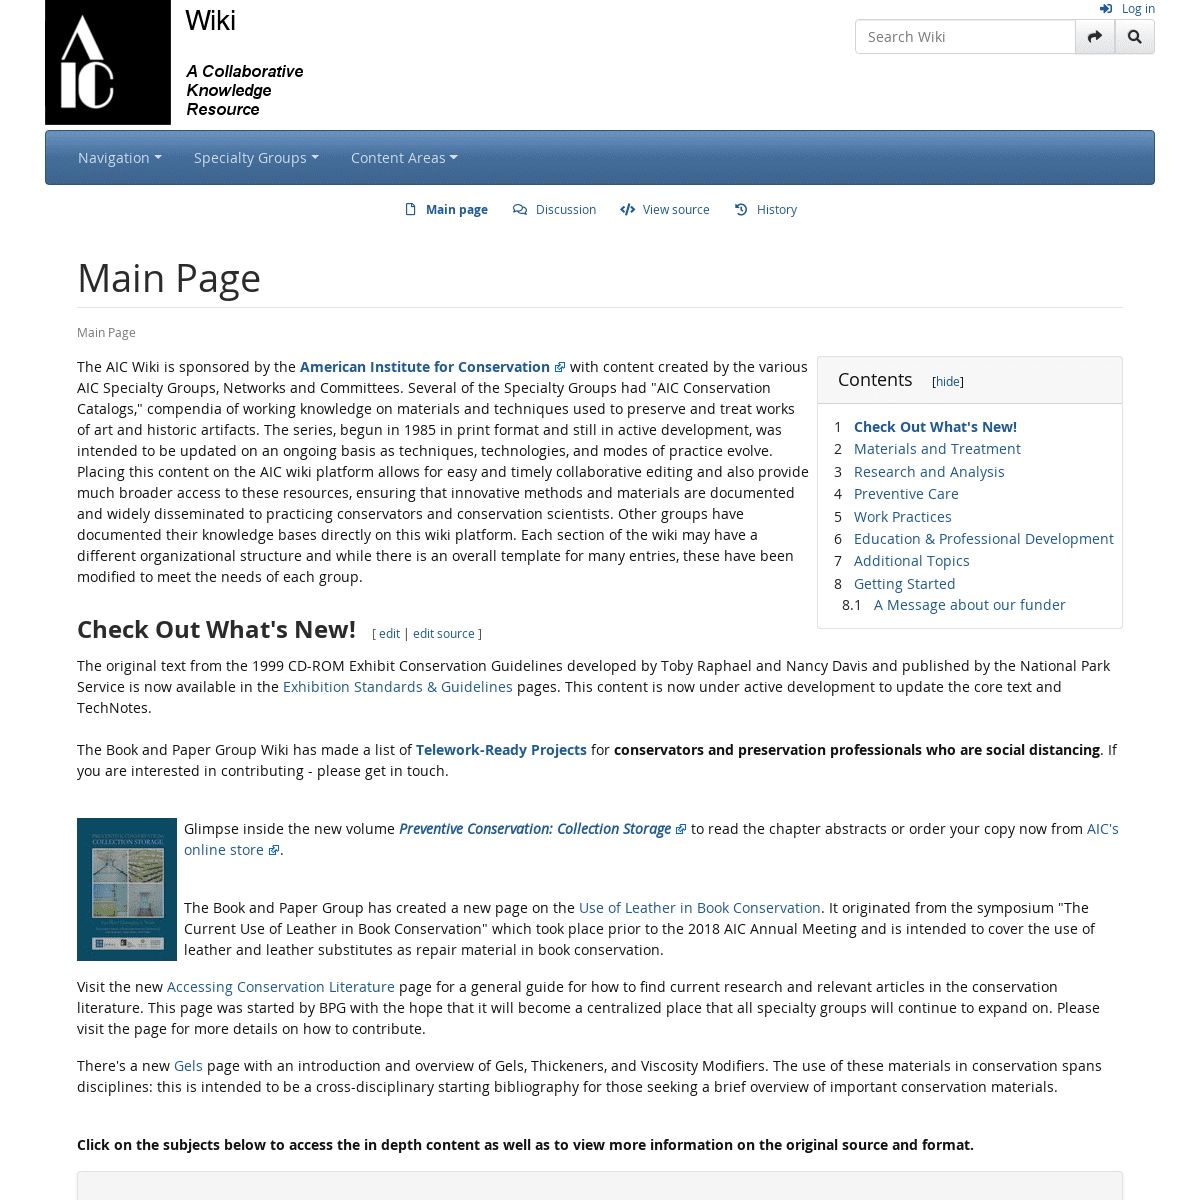 A complete backup of https://conservation-wiki.com